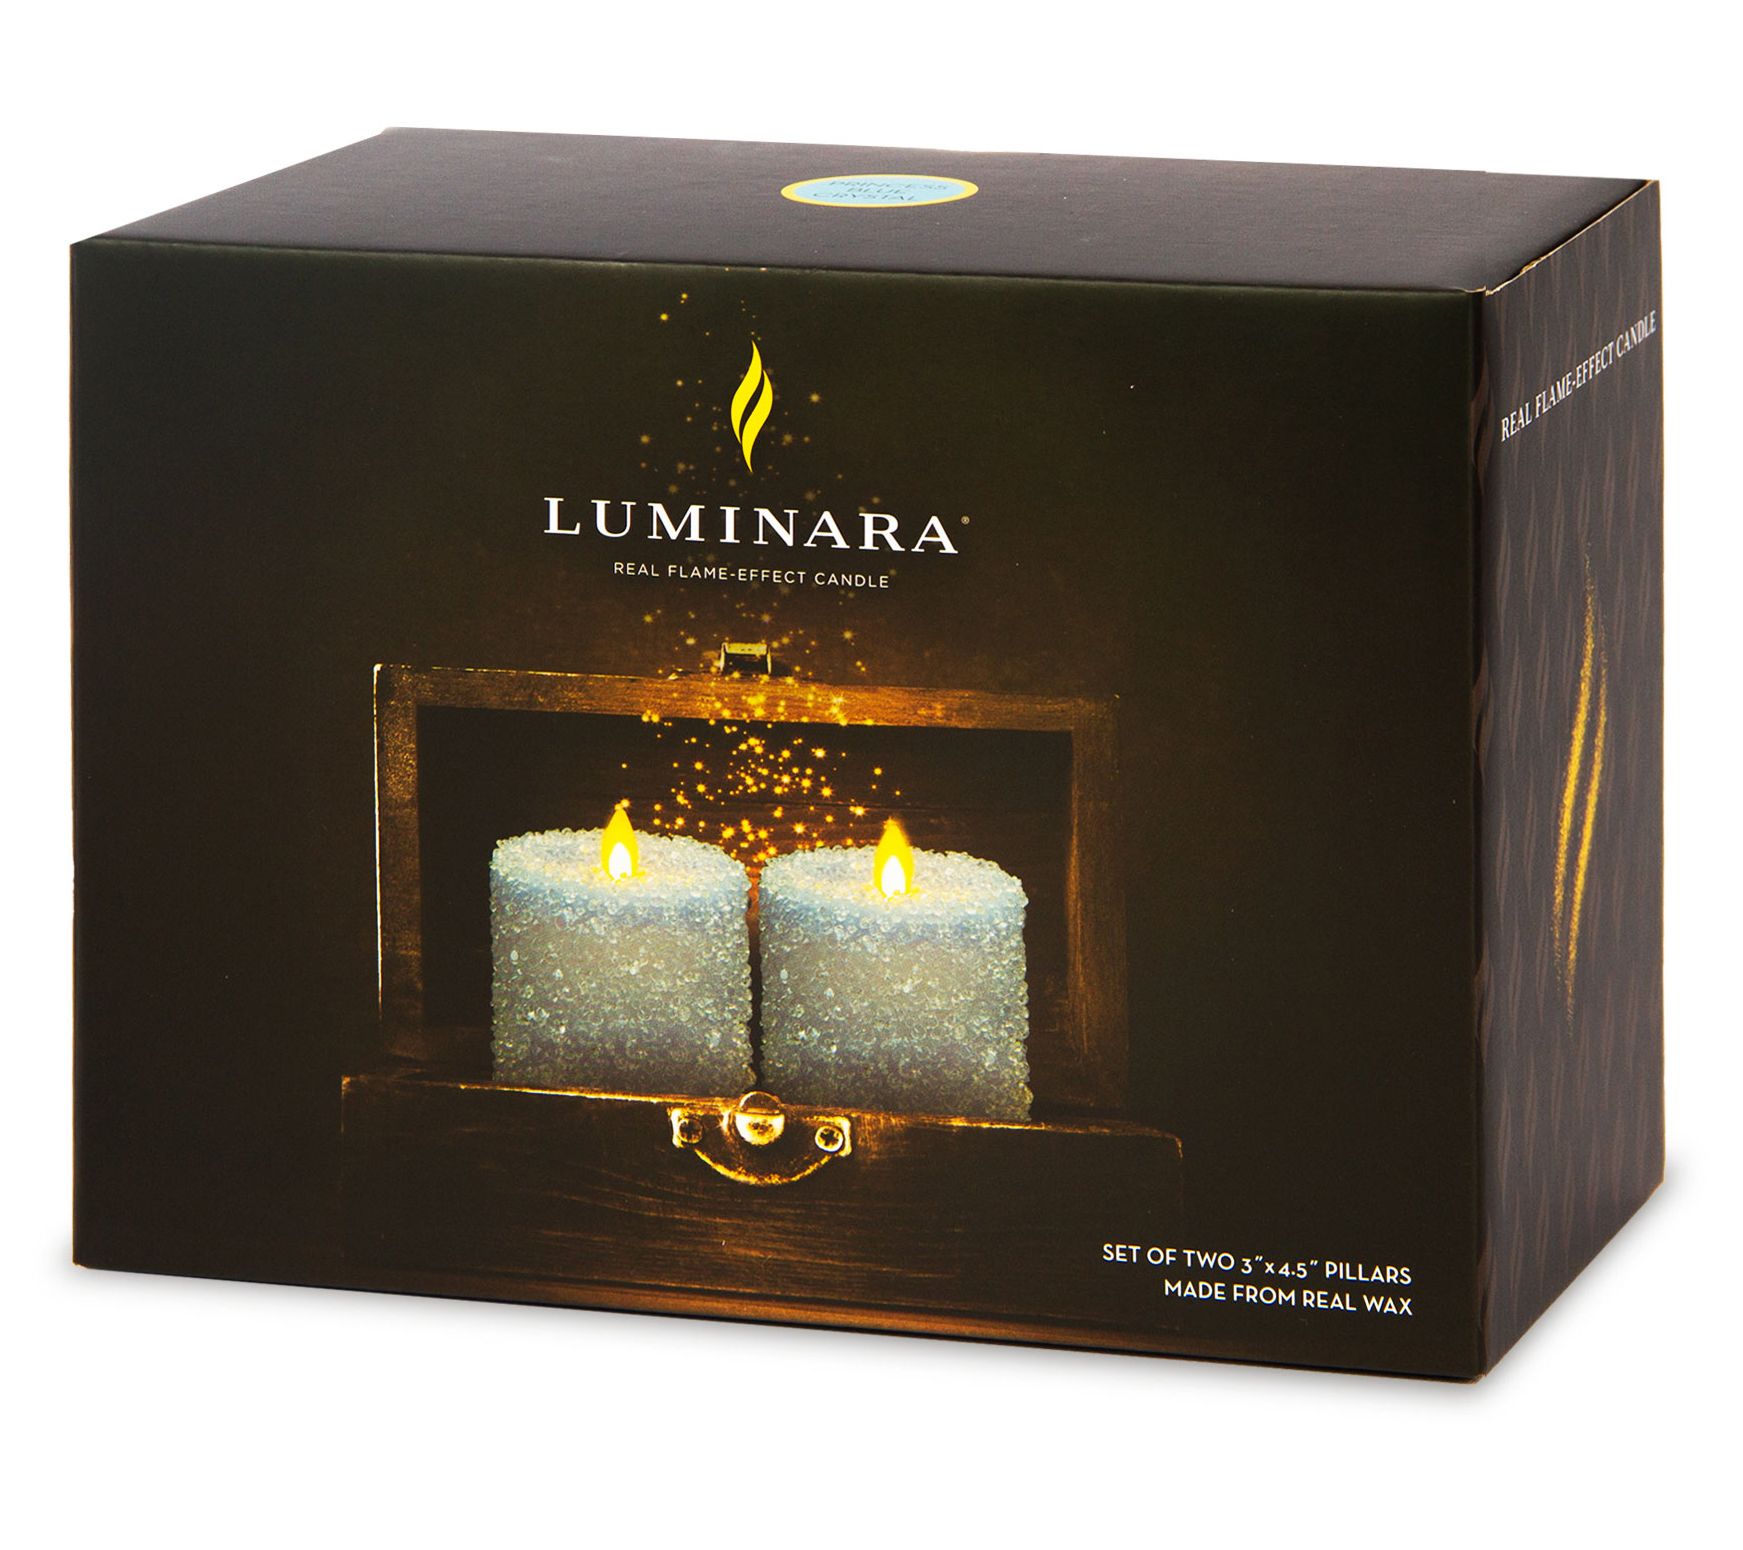 Luminara crystal centerpiece with love bird etching